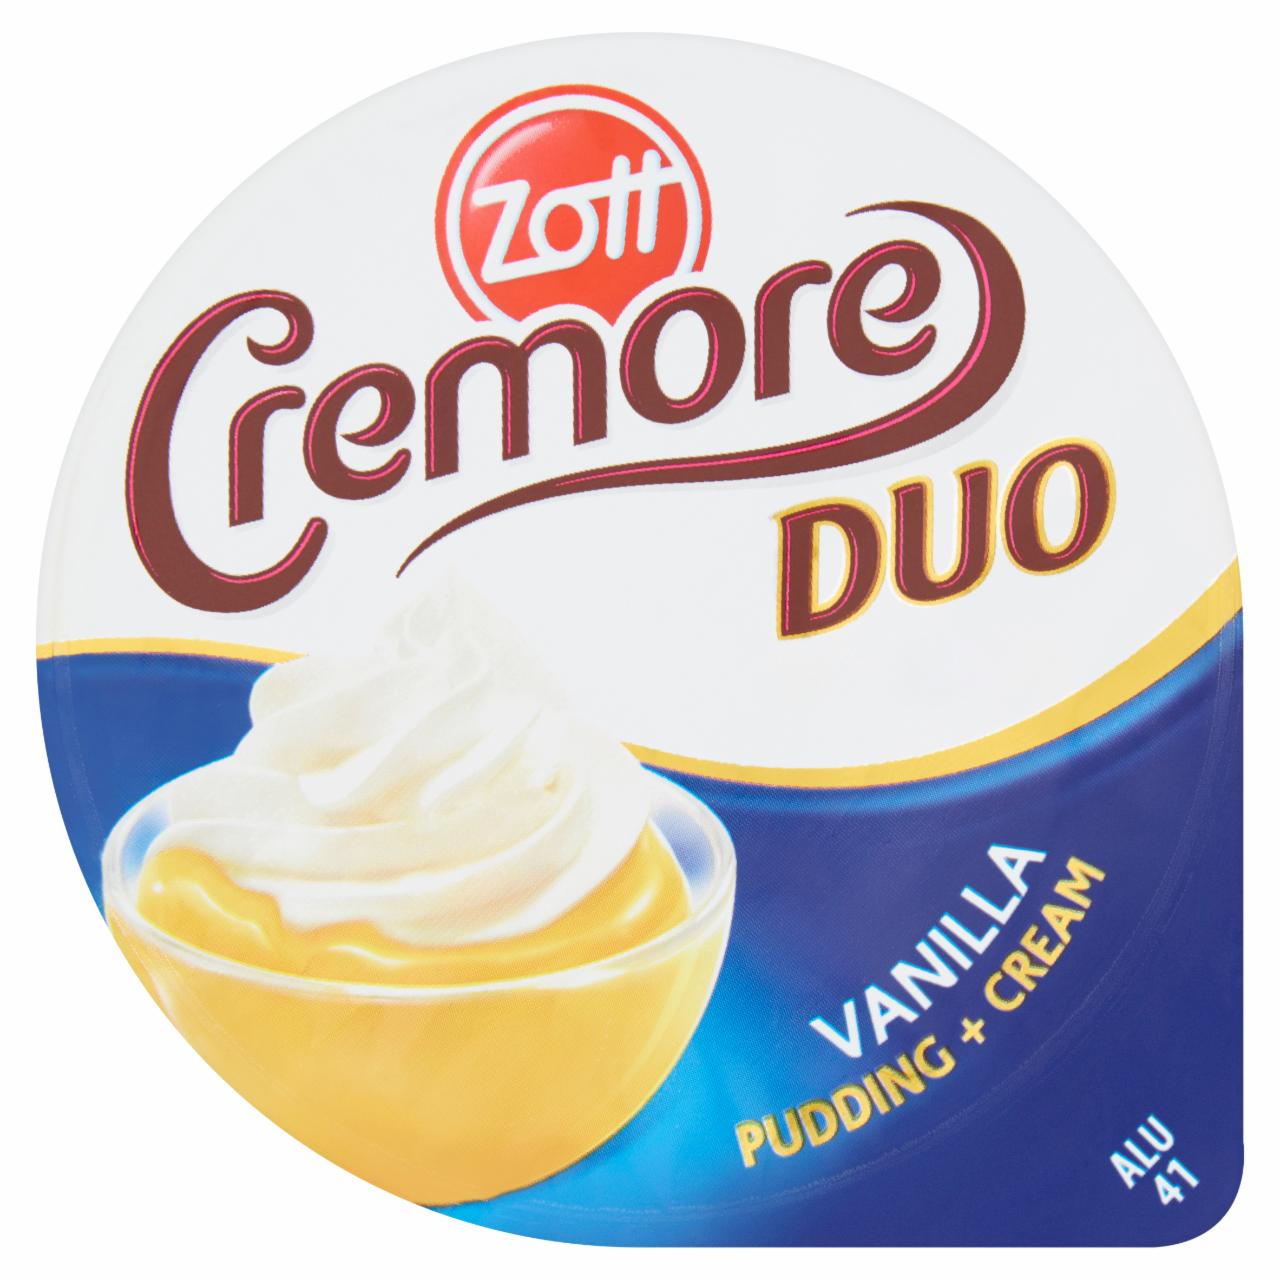 Képek - Cremore Duo vanília ízű puding tejszínhabbal Zott